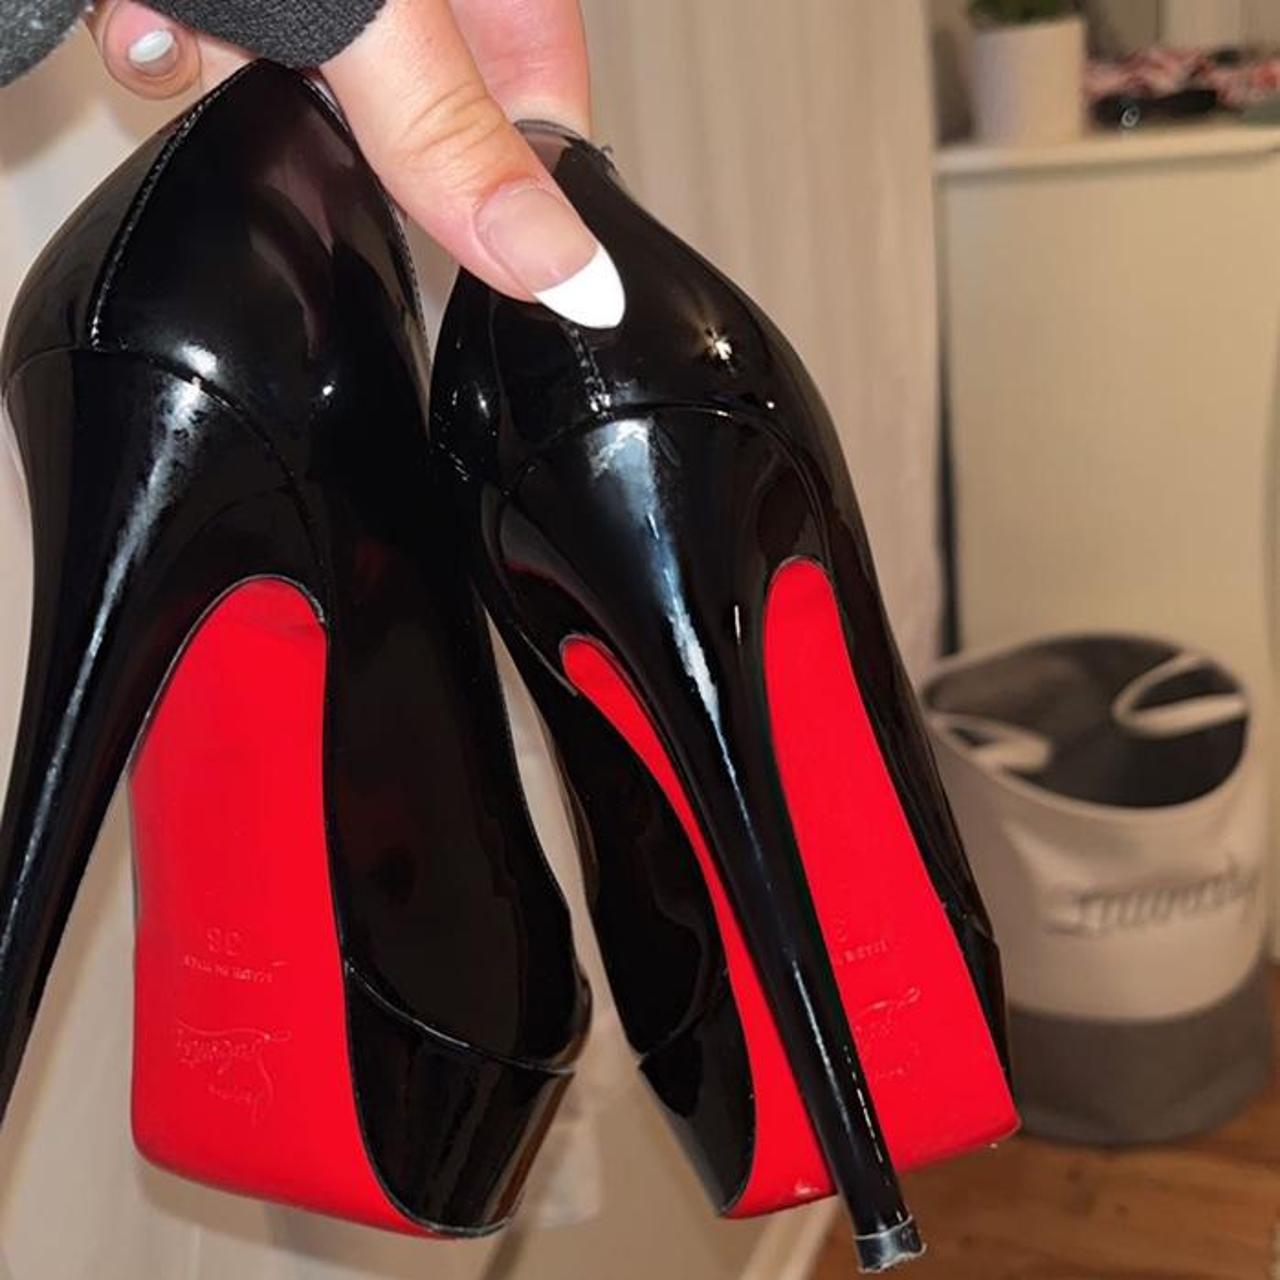 Christian Louboutin heels size 38, fits like a size